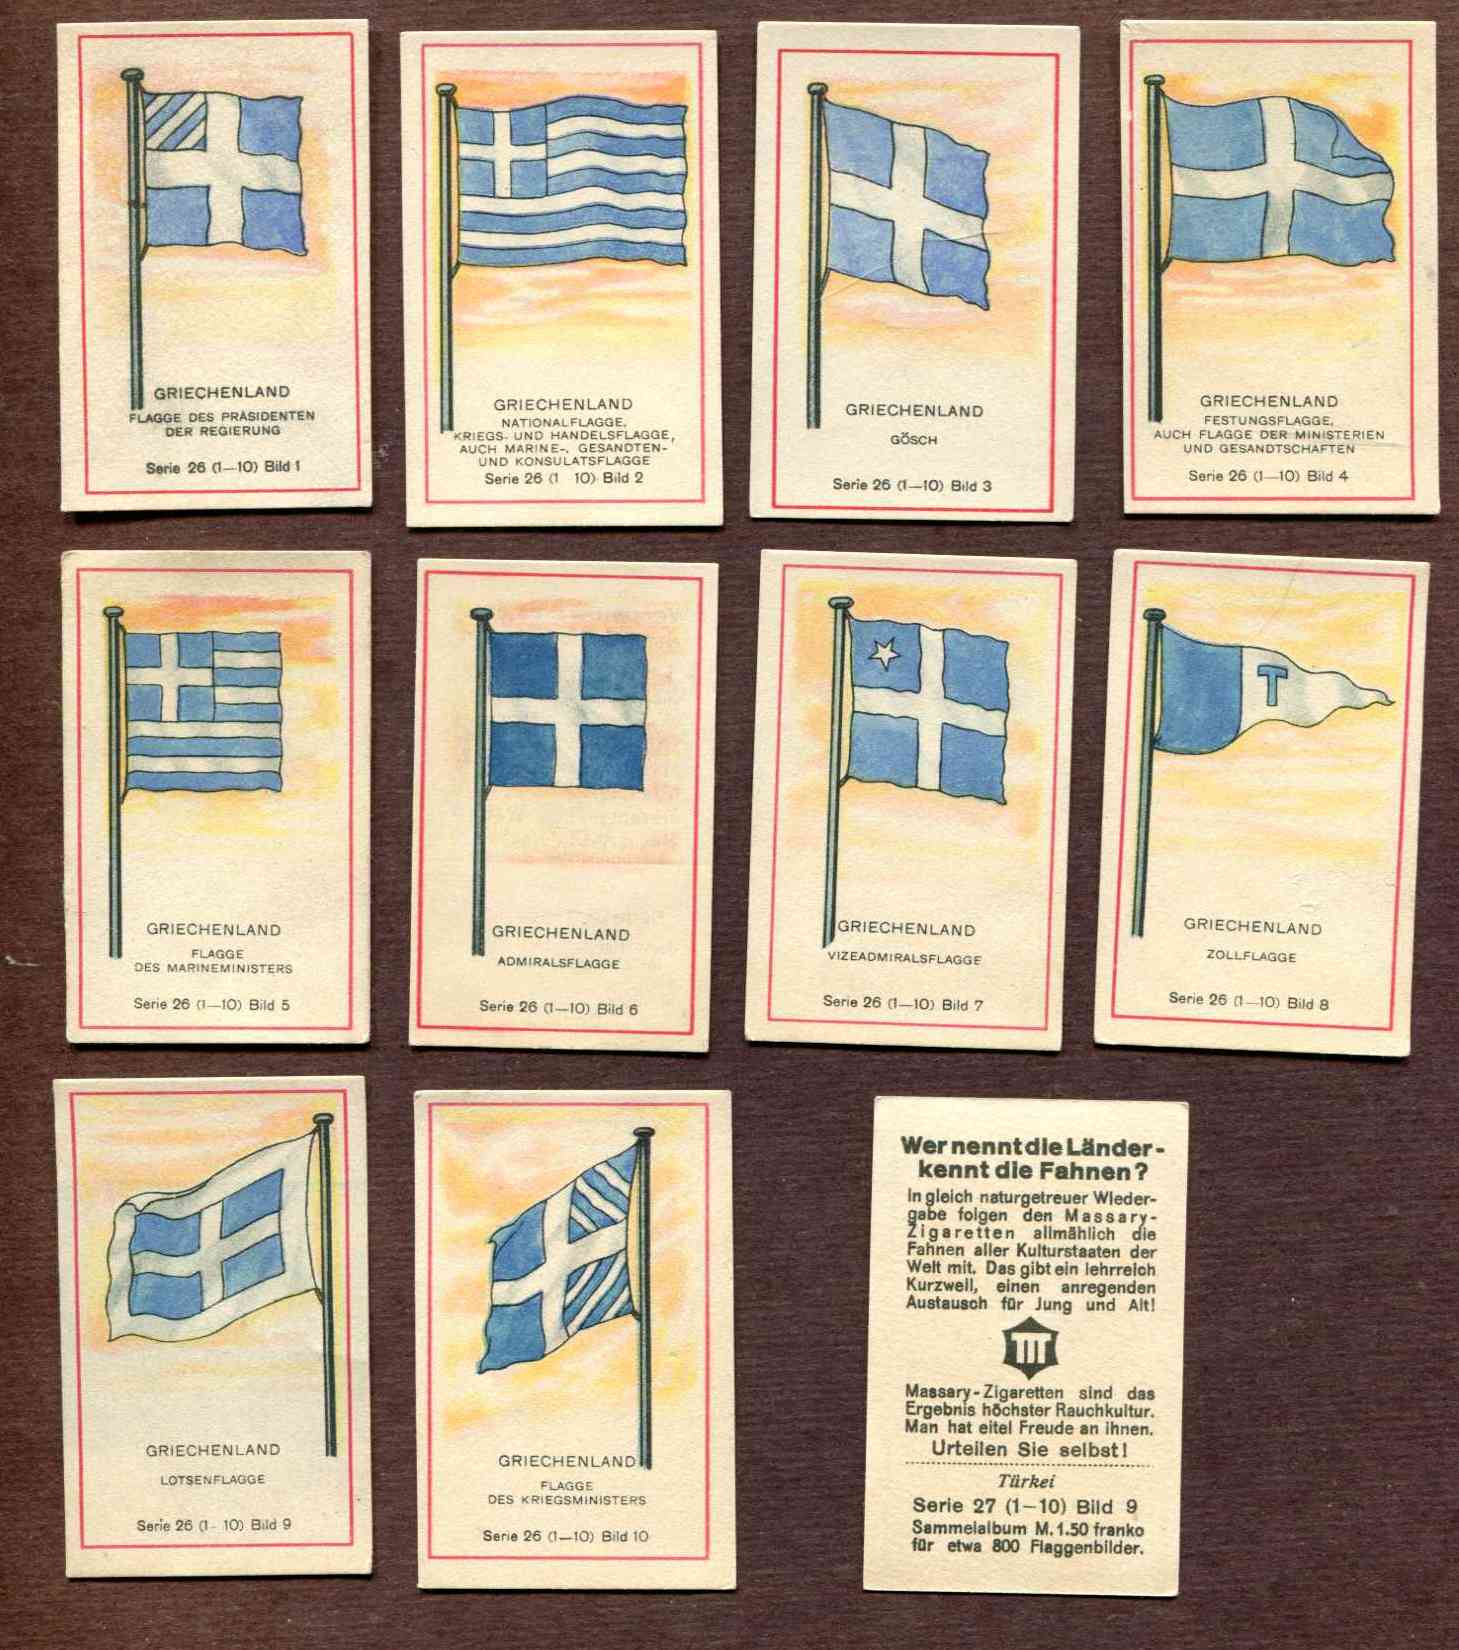 1929 'Wer nennt die Lander' GREECE Flag cards - SET (Series 26-10 cards) n cards value